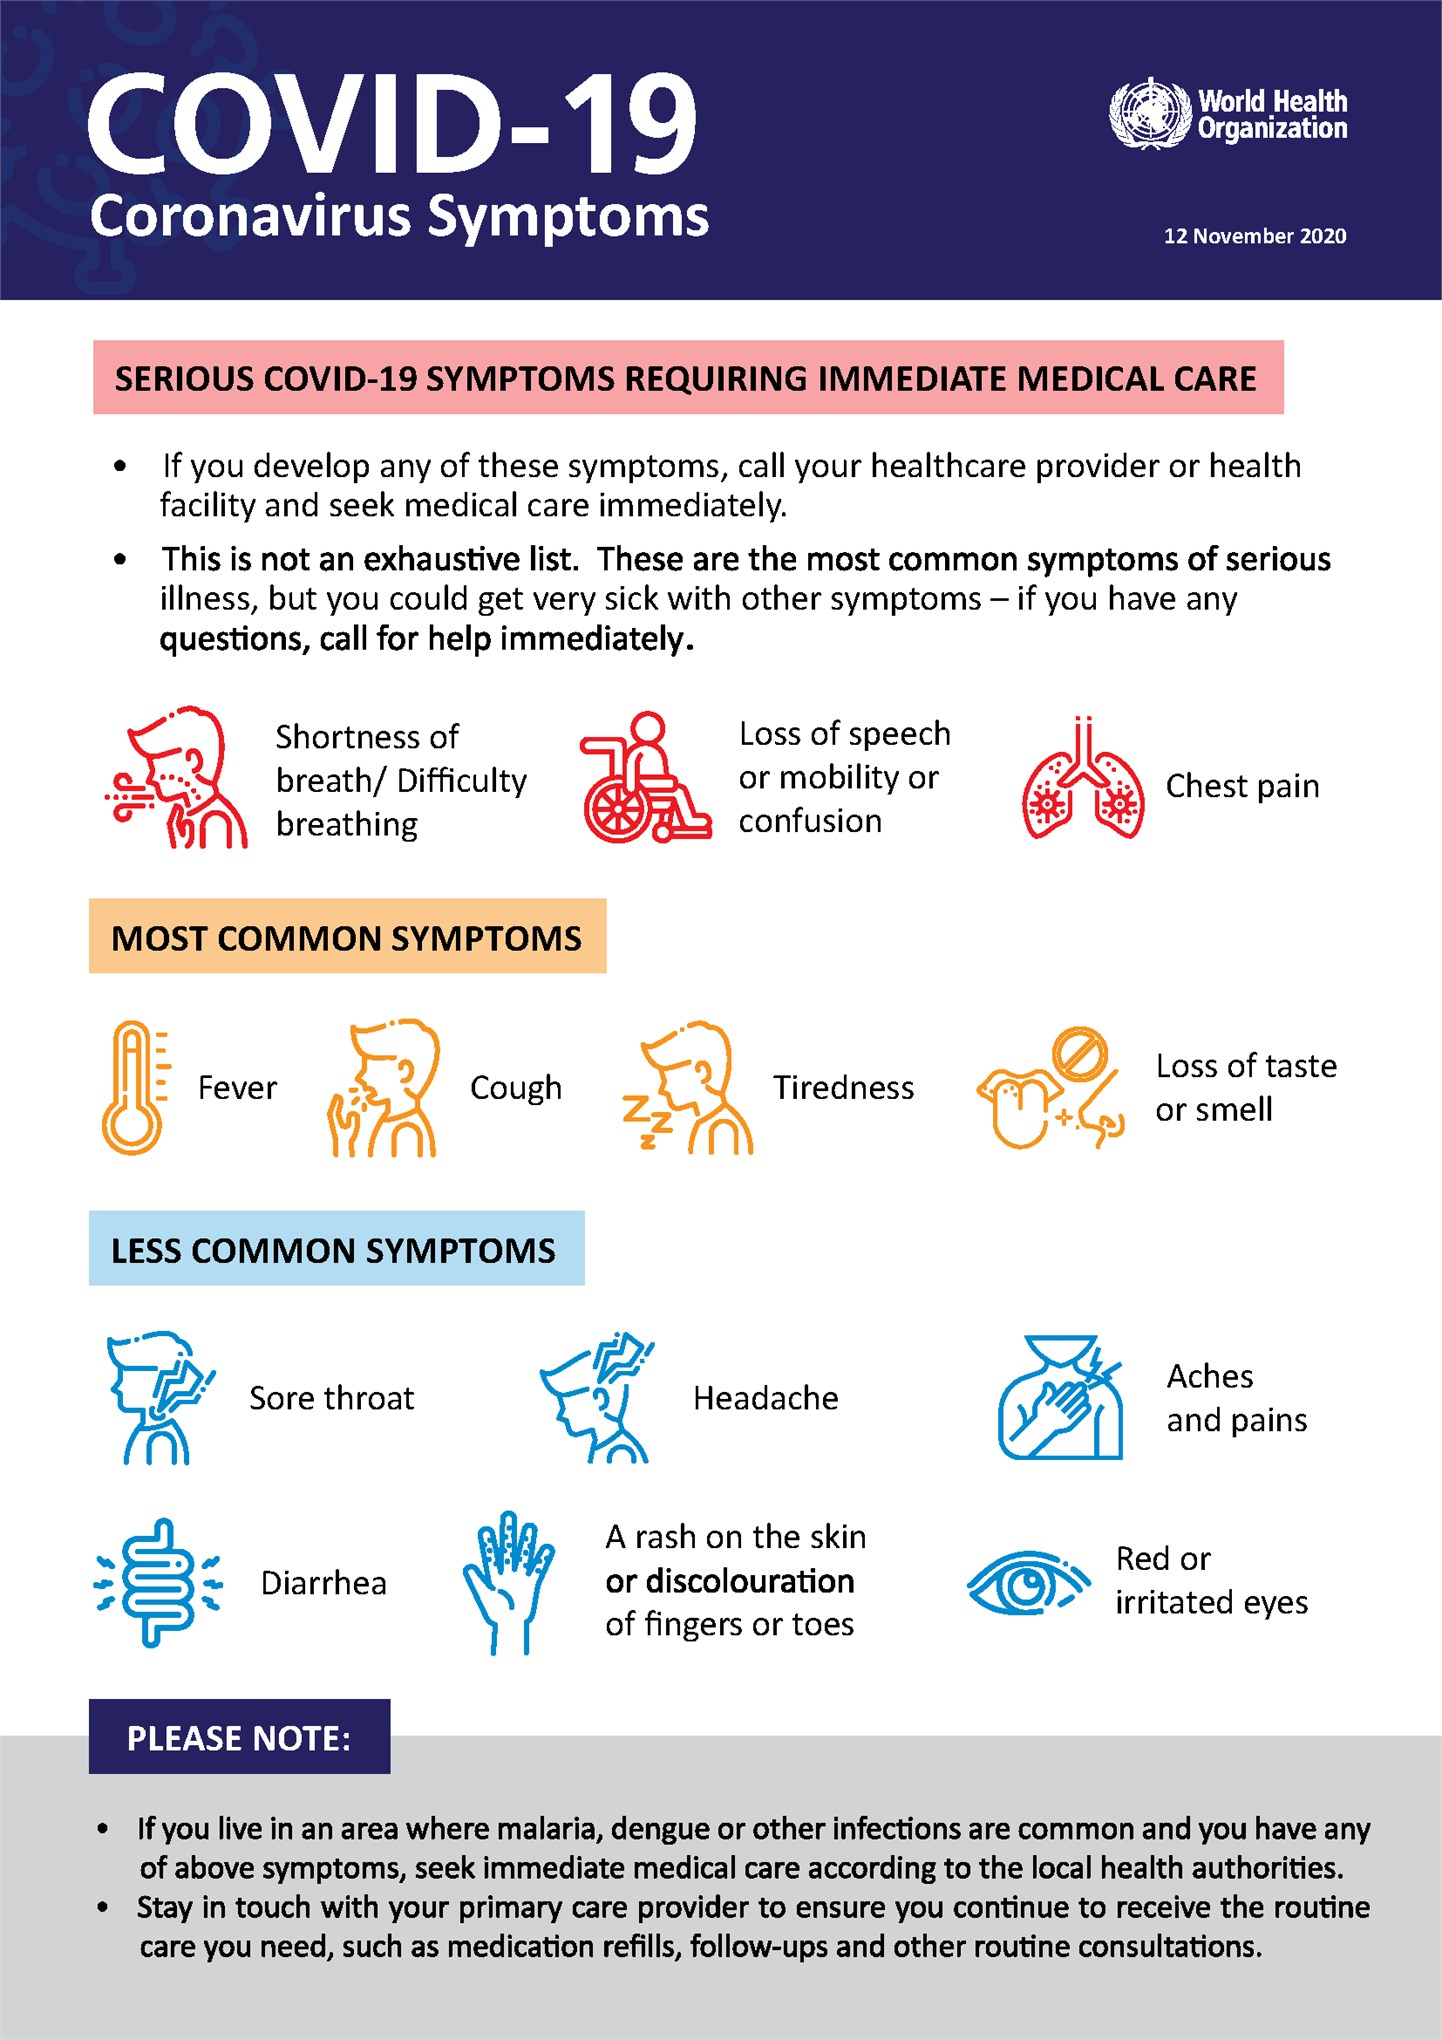 Coronavirus disease (COVID-19) advice for the public from WHO